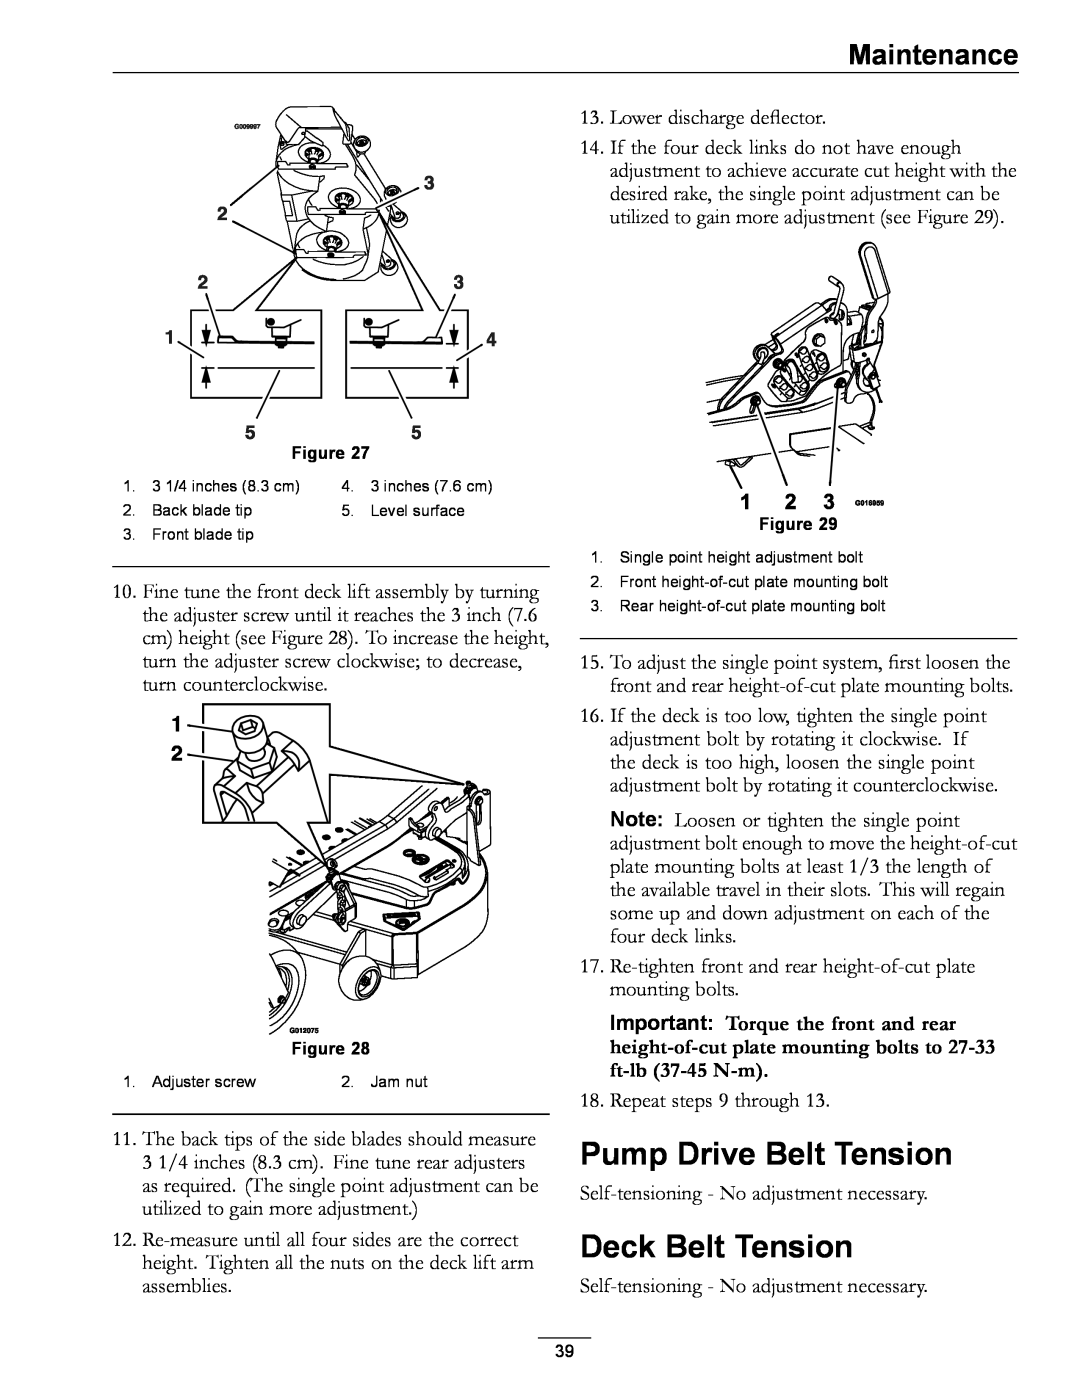 Exmark 000 & higher, 312 manual Pump Drive Belt Tension, Deck Belt Tension, Maintenance 